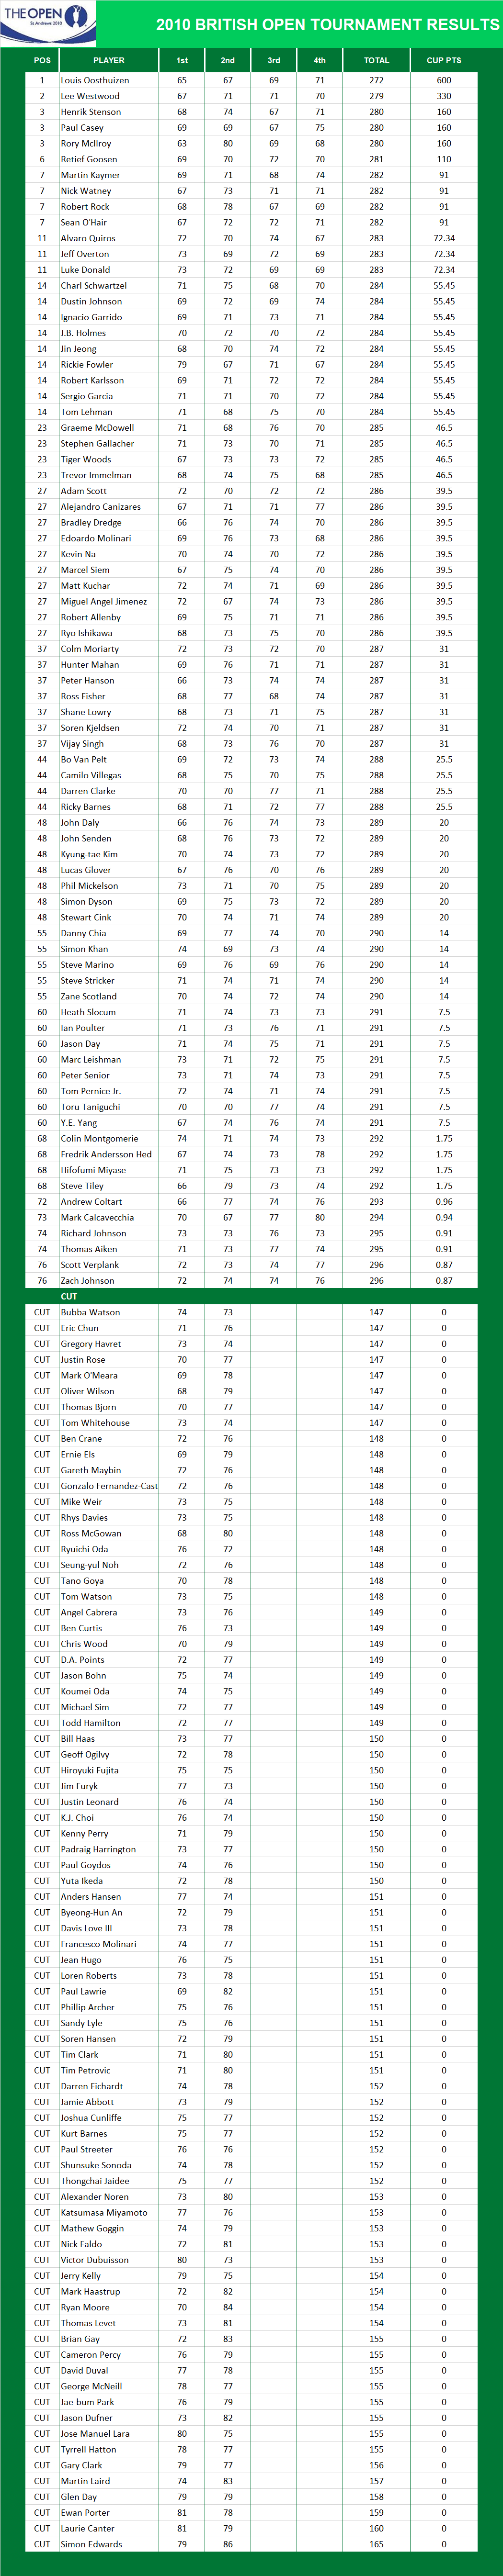 2010 British Open Championship PGA Results